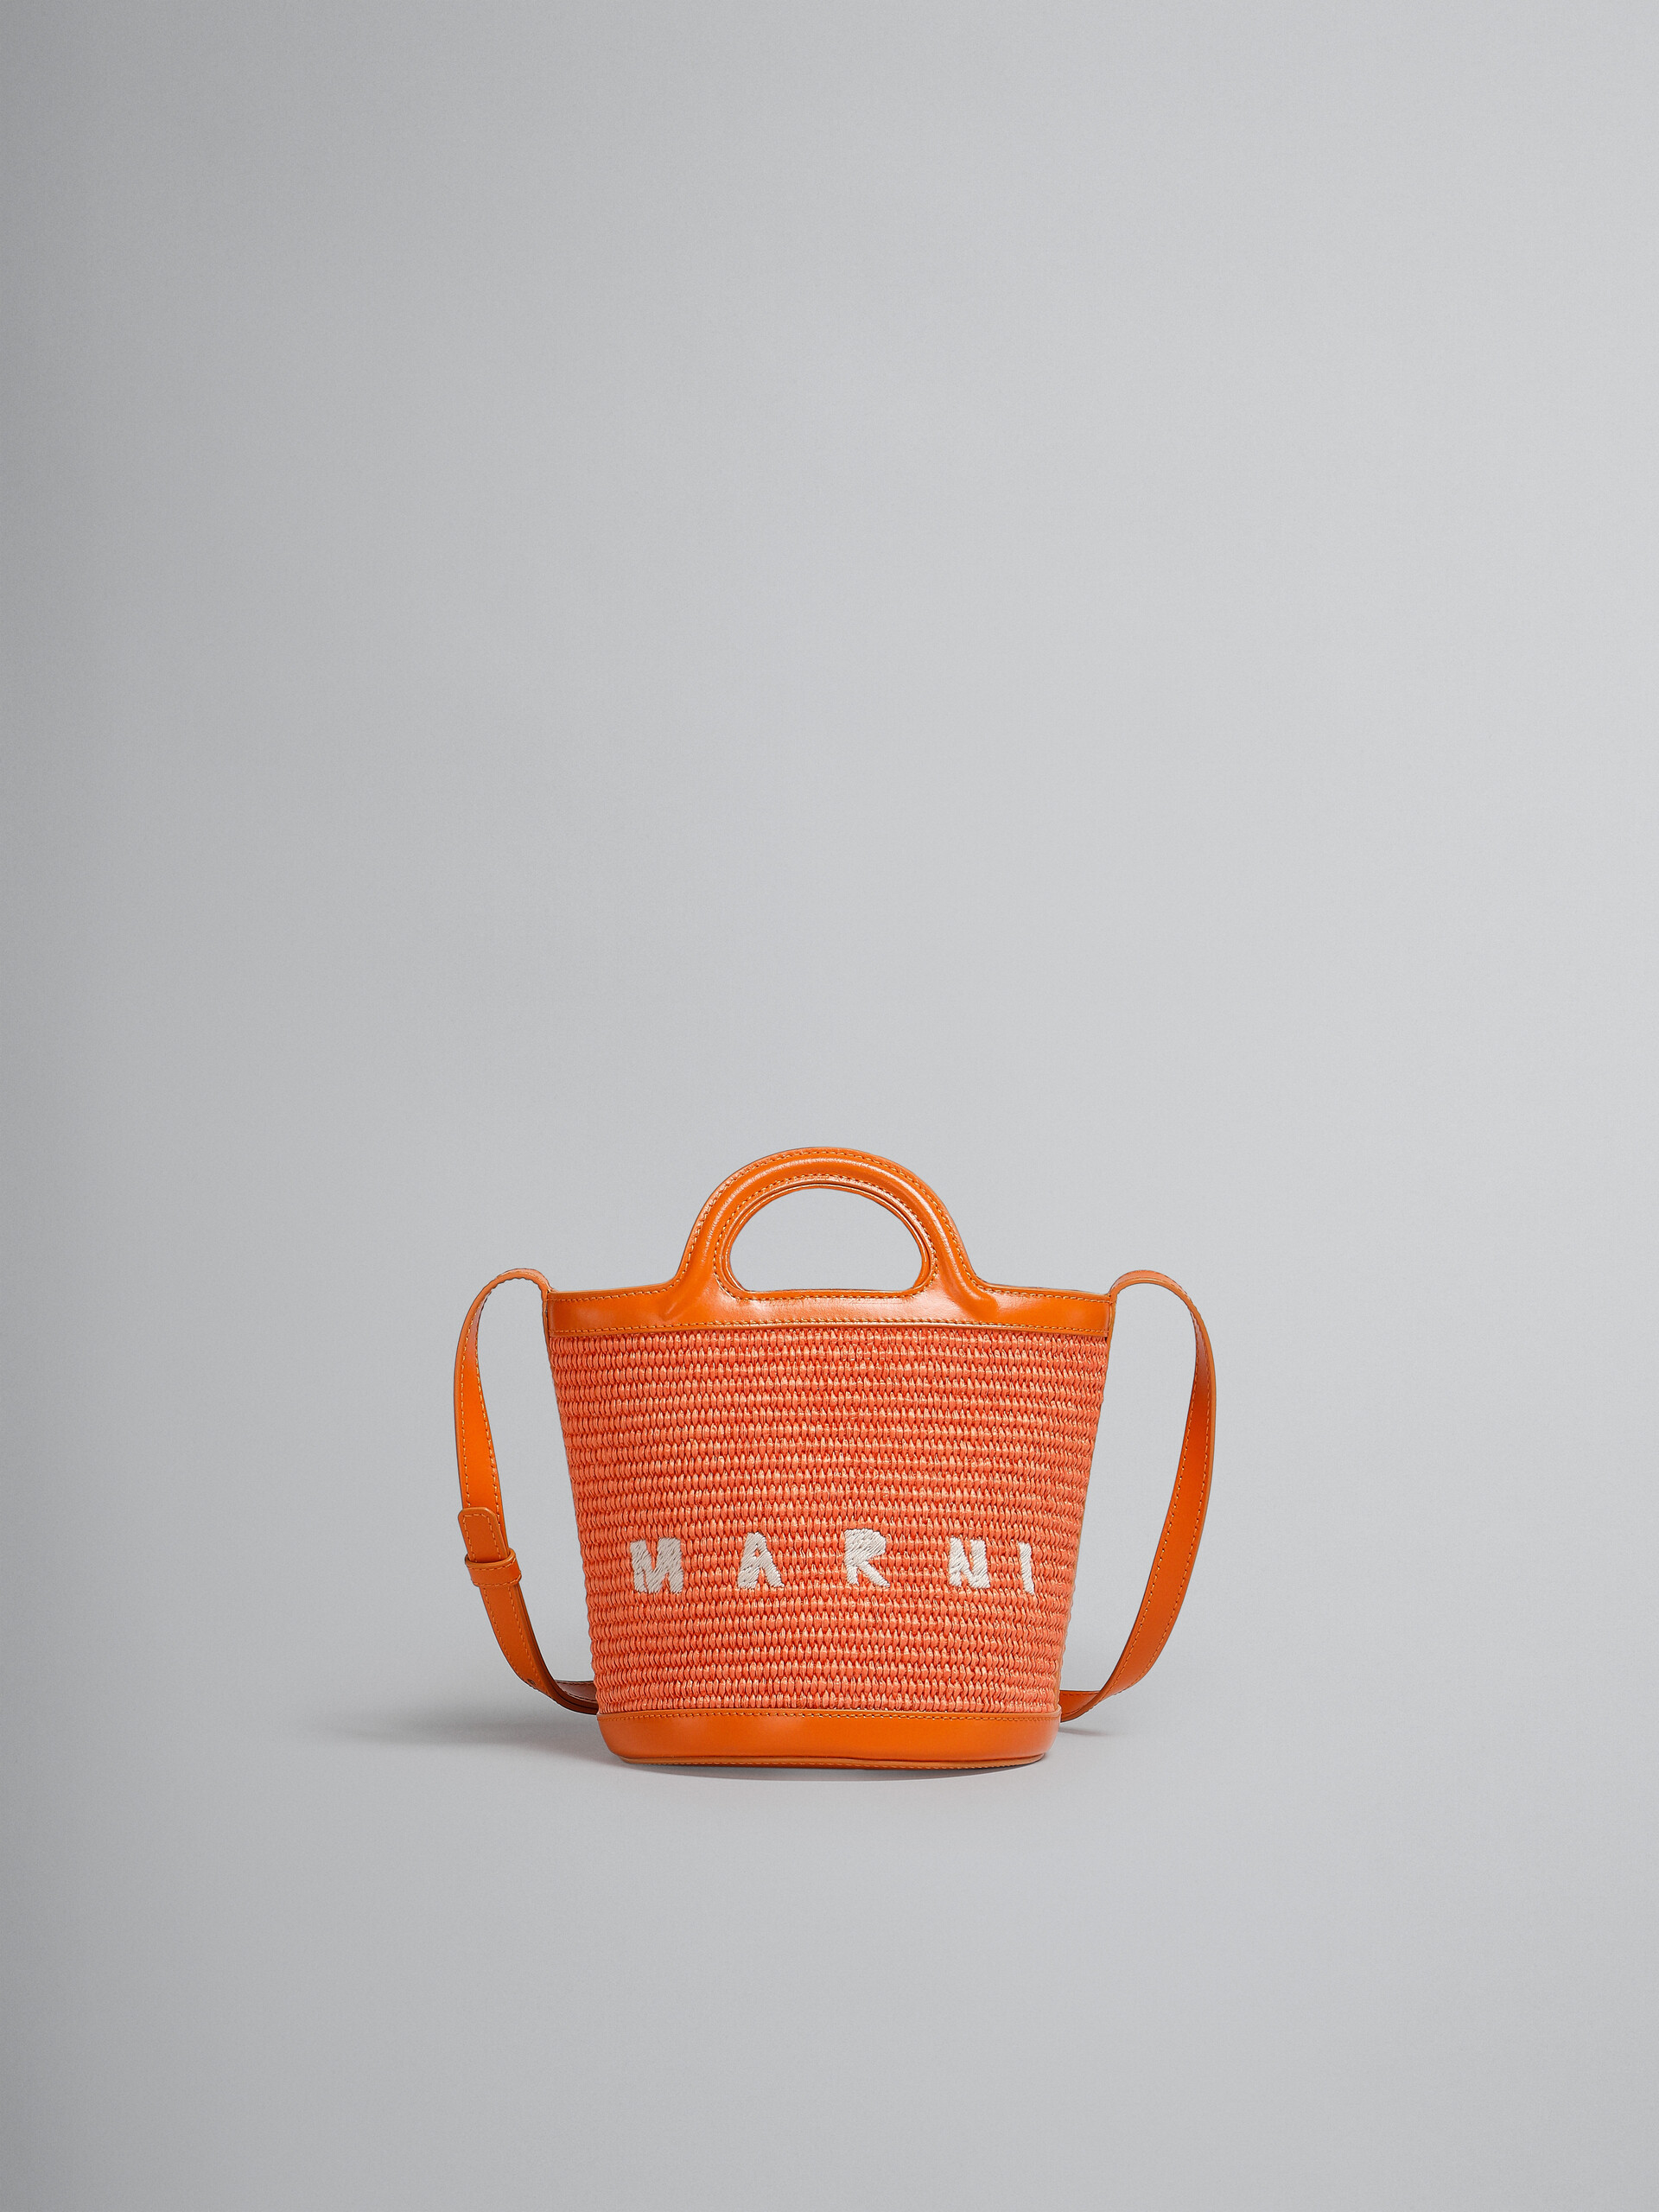 Tropicalia Small Bucket Bag in orange leather and raffia - Shoulder Bag - Image 1